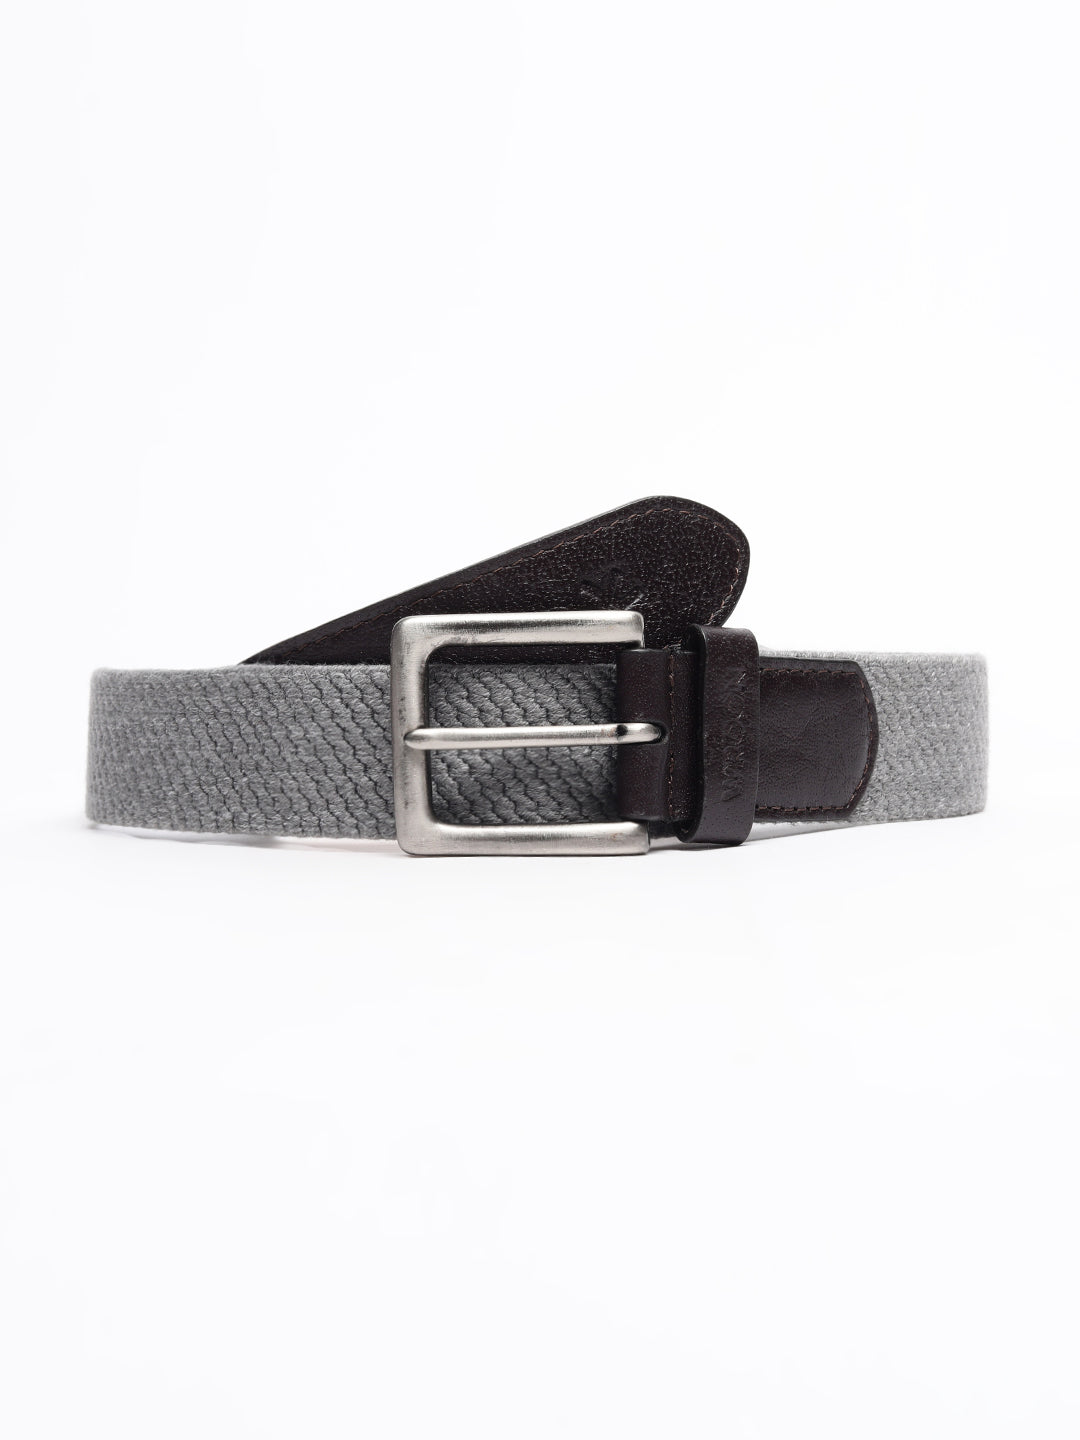 Stretchable Braided Belt